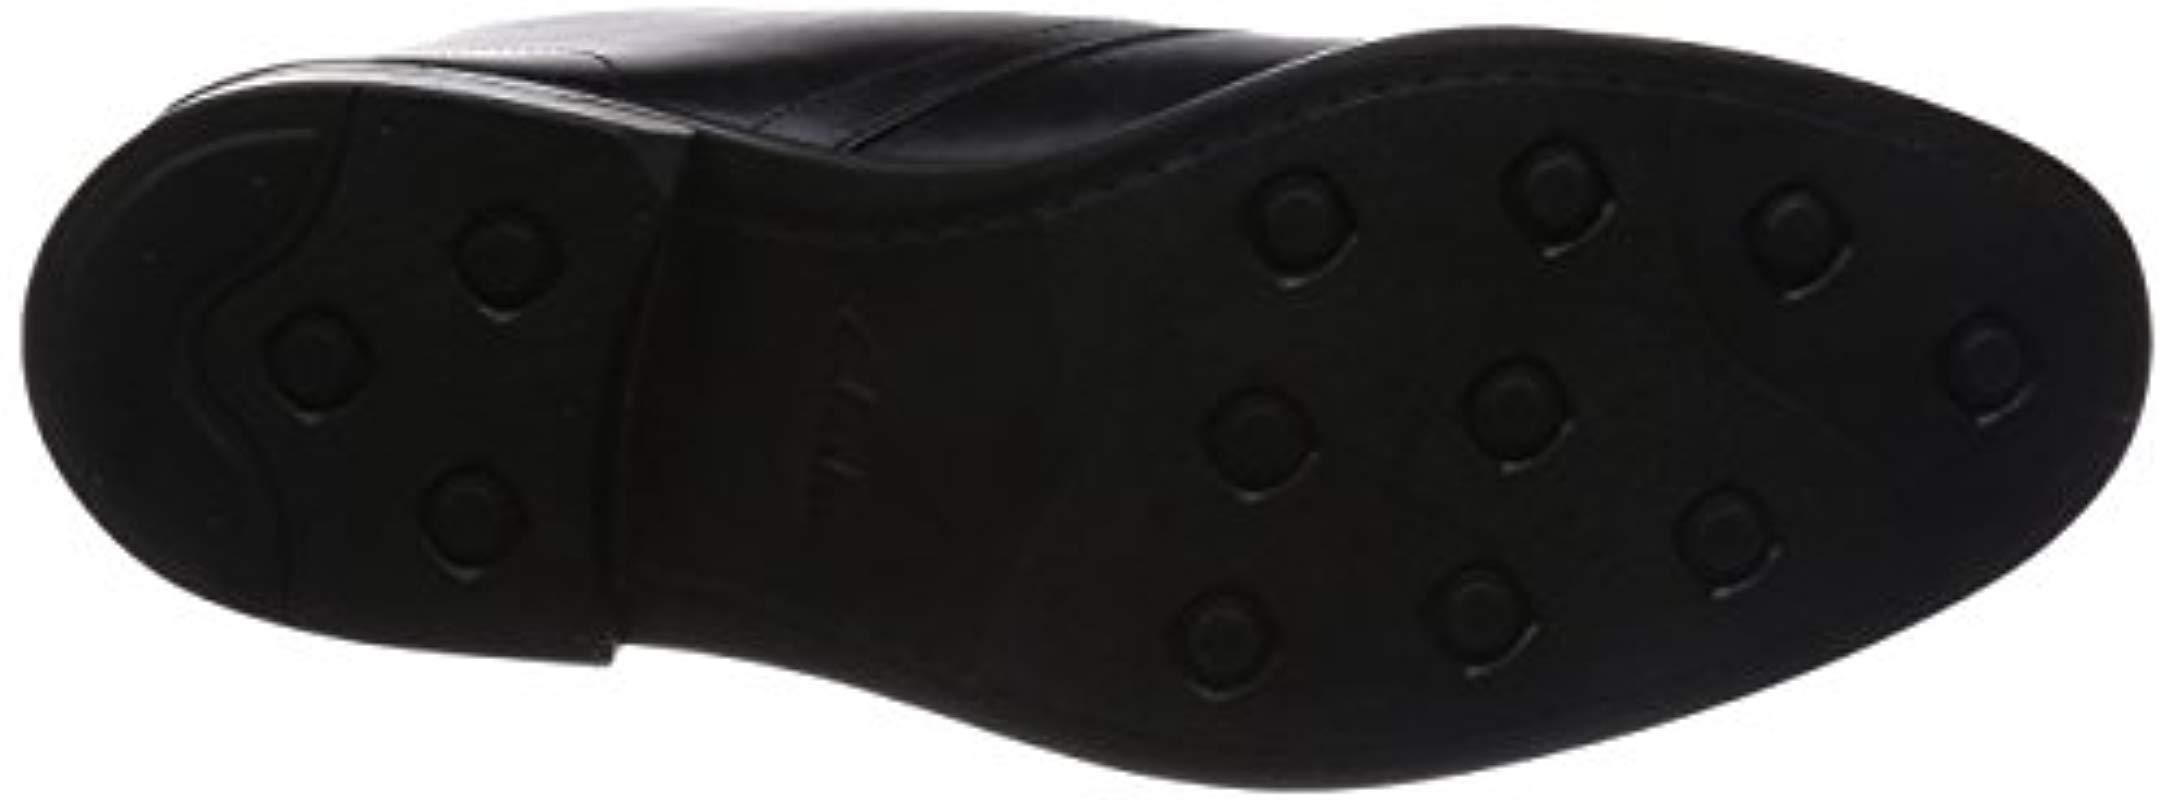 Clarks Leather Chilver Hi Gtx Ankle Boots in Black Black Leather (Black)  for Men - Save 31% | Lyst UK